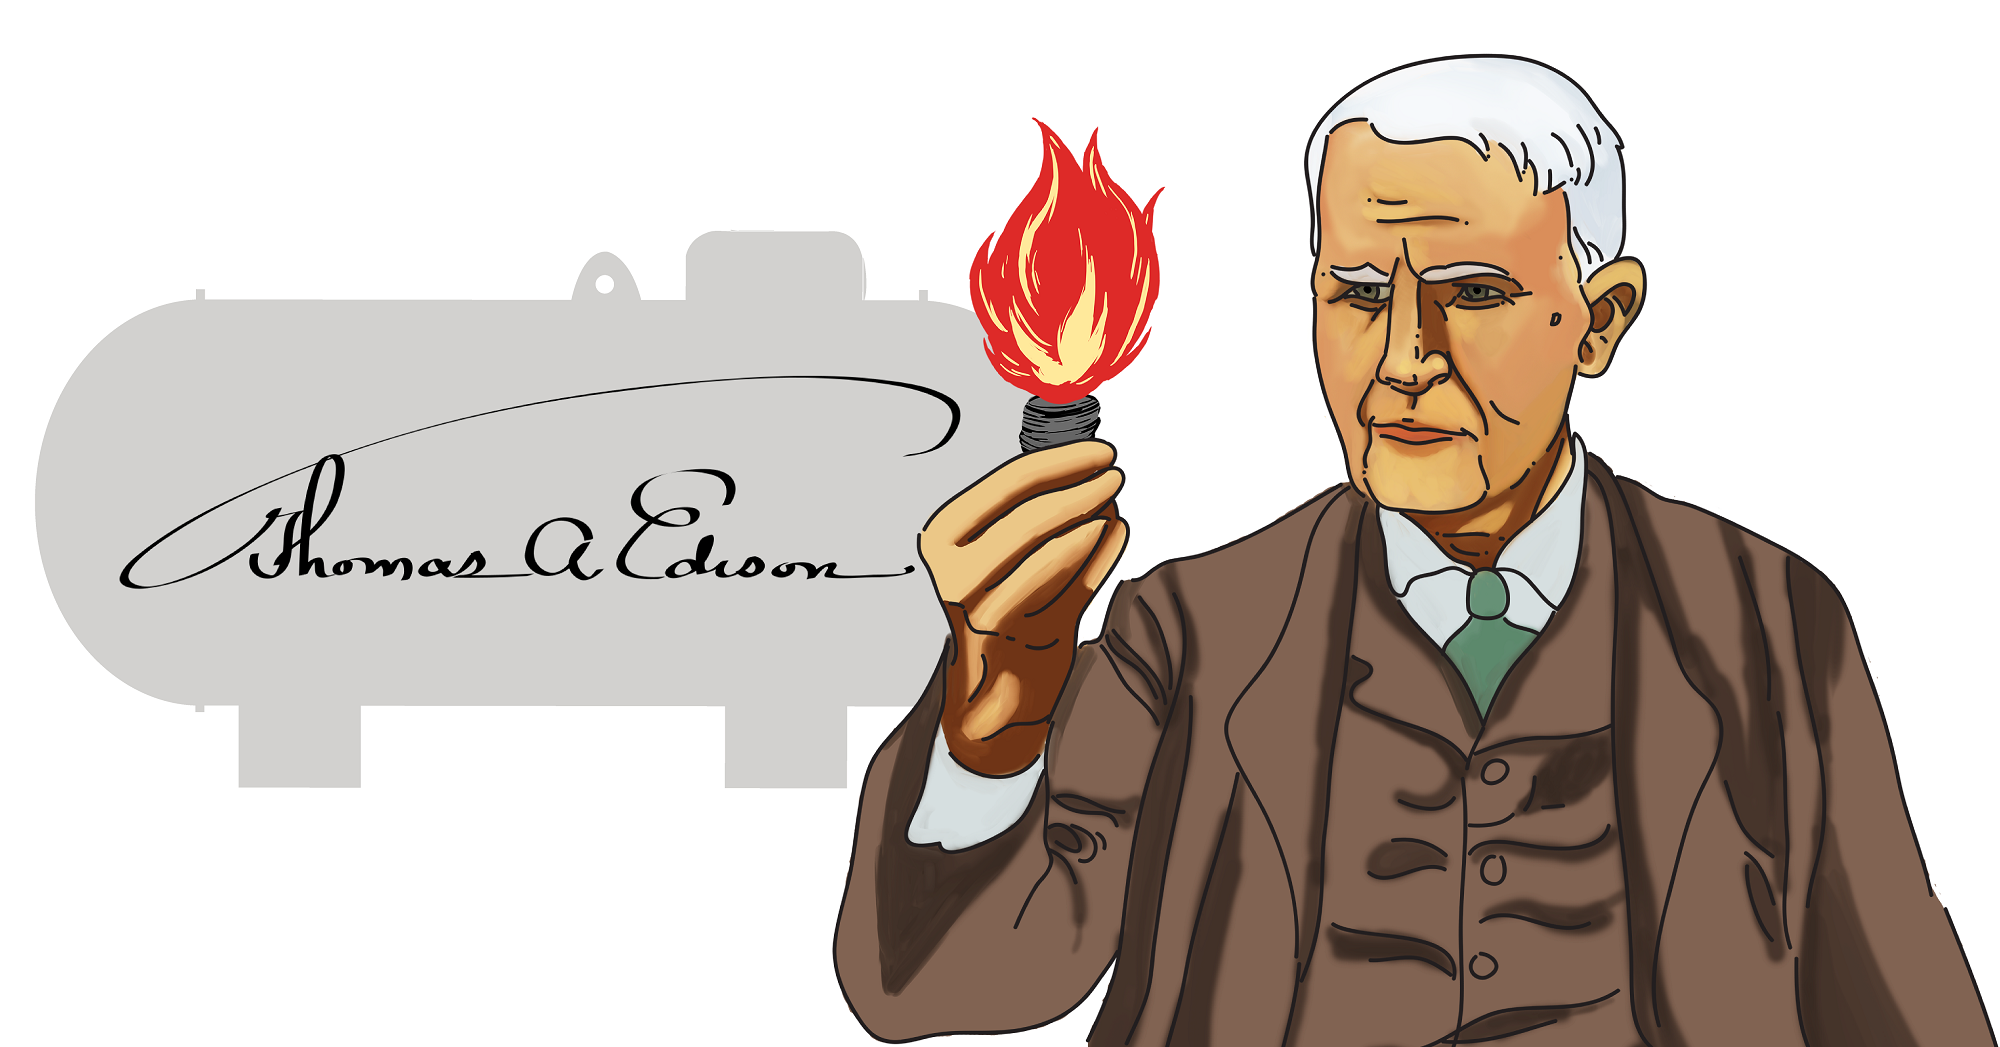 Edison by v roce 2023 topil propanem